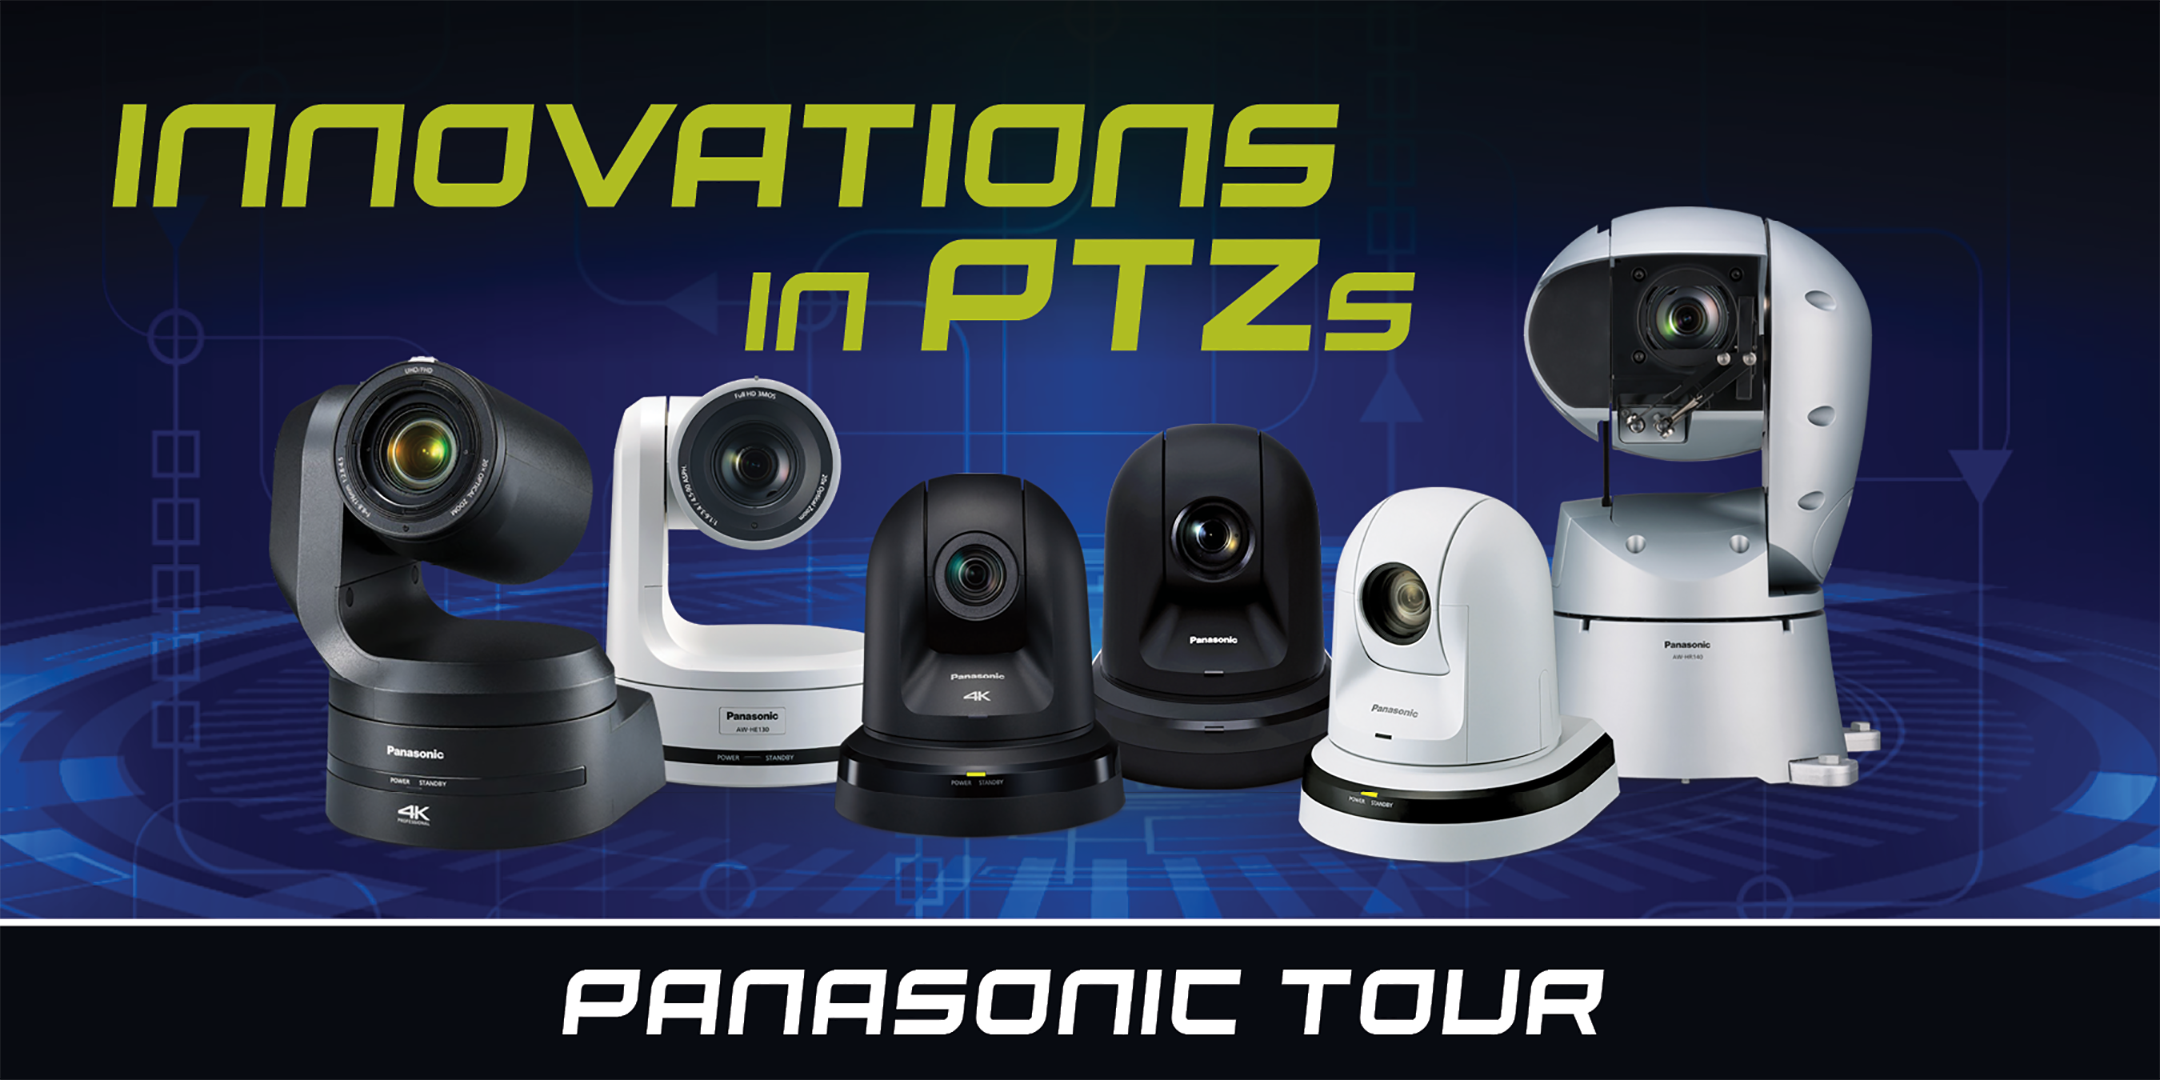 2019 Panasonic Innovations in PTZ Cameras Tour